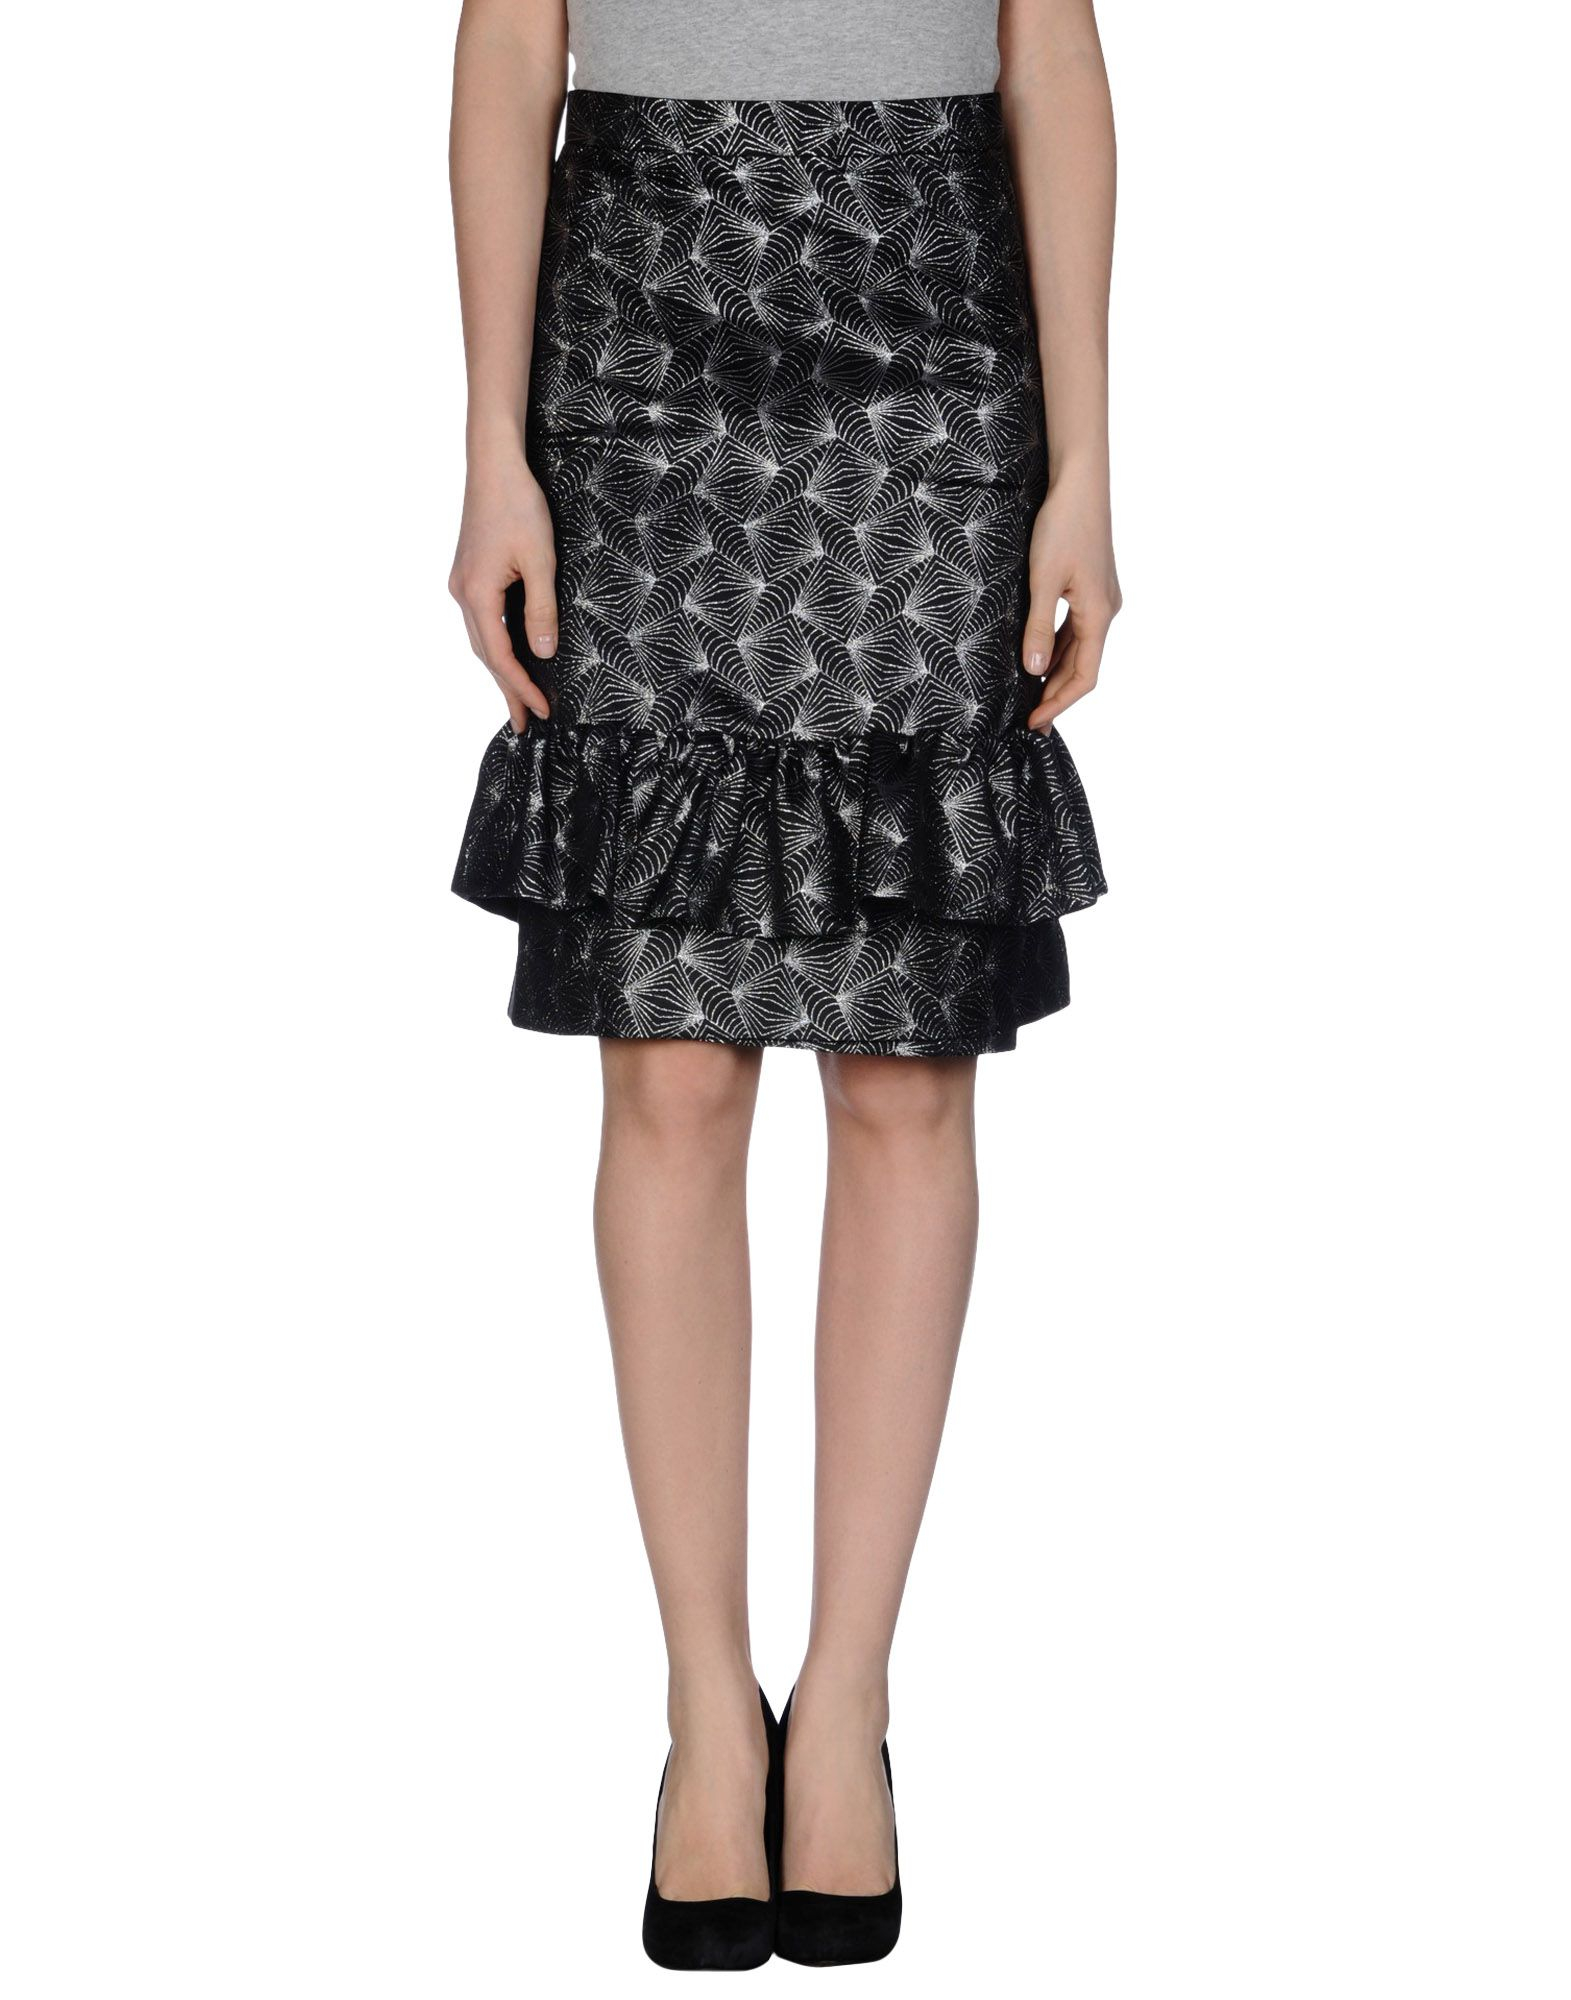 Lyst - Dries Van Noten 3/4 Length Skirt in Black